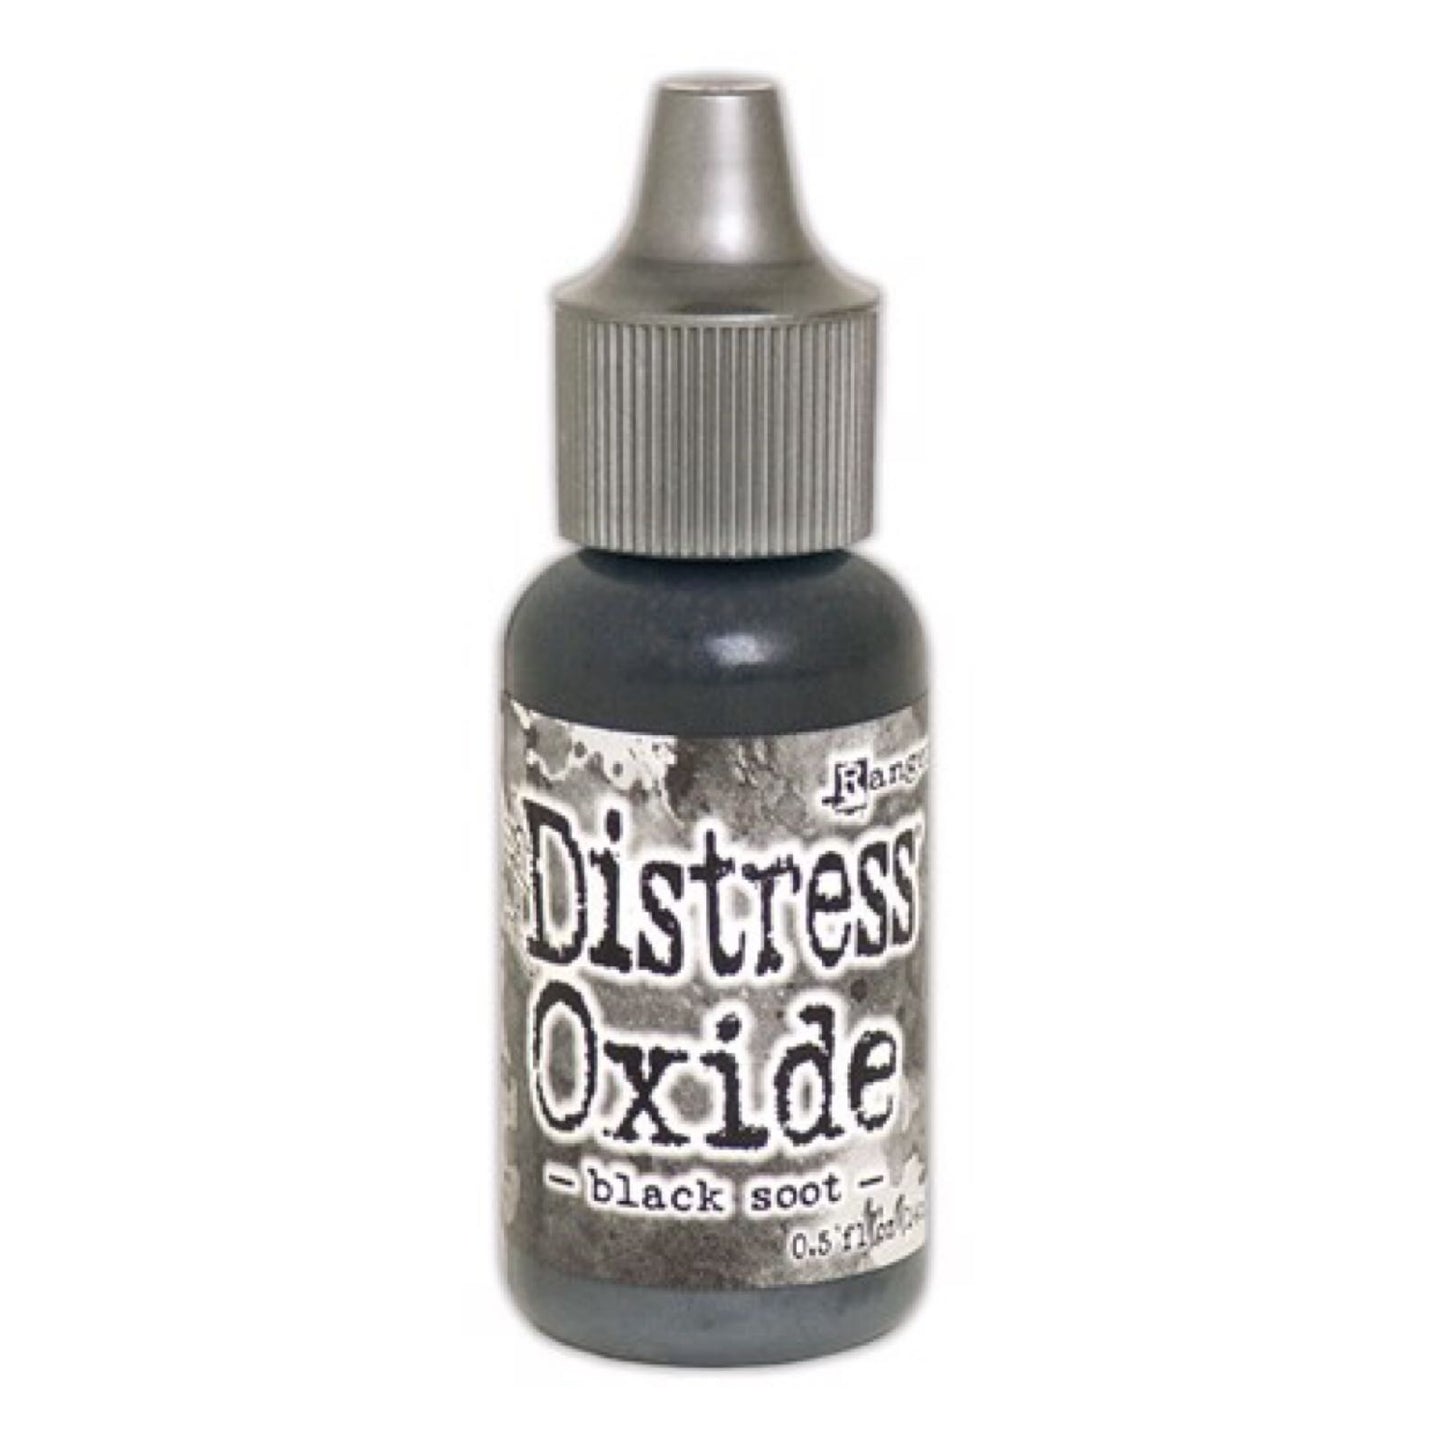 Distress oxide ink refill  Black soot